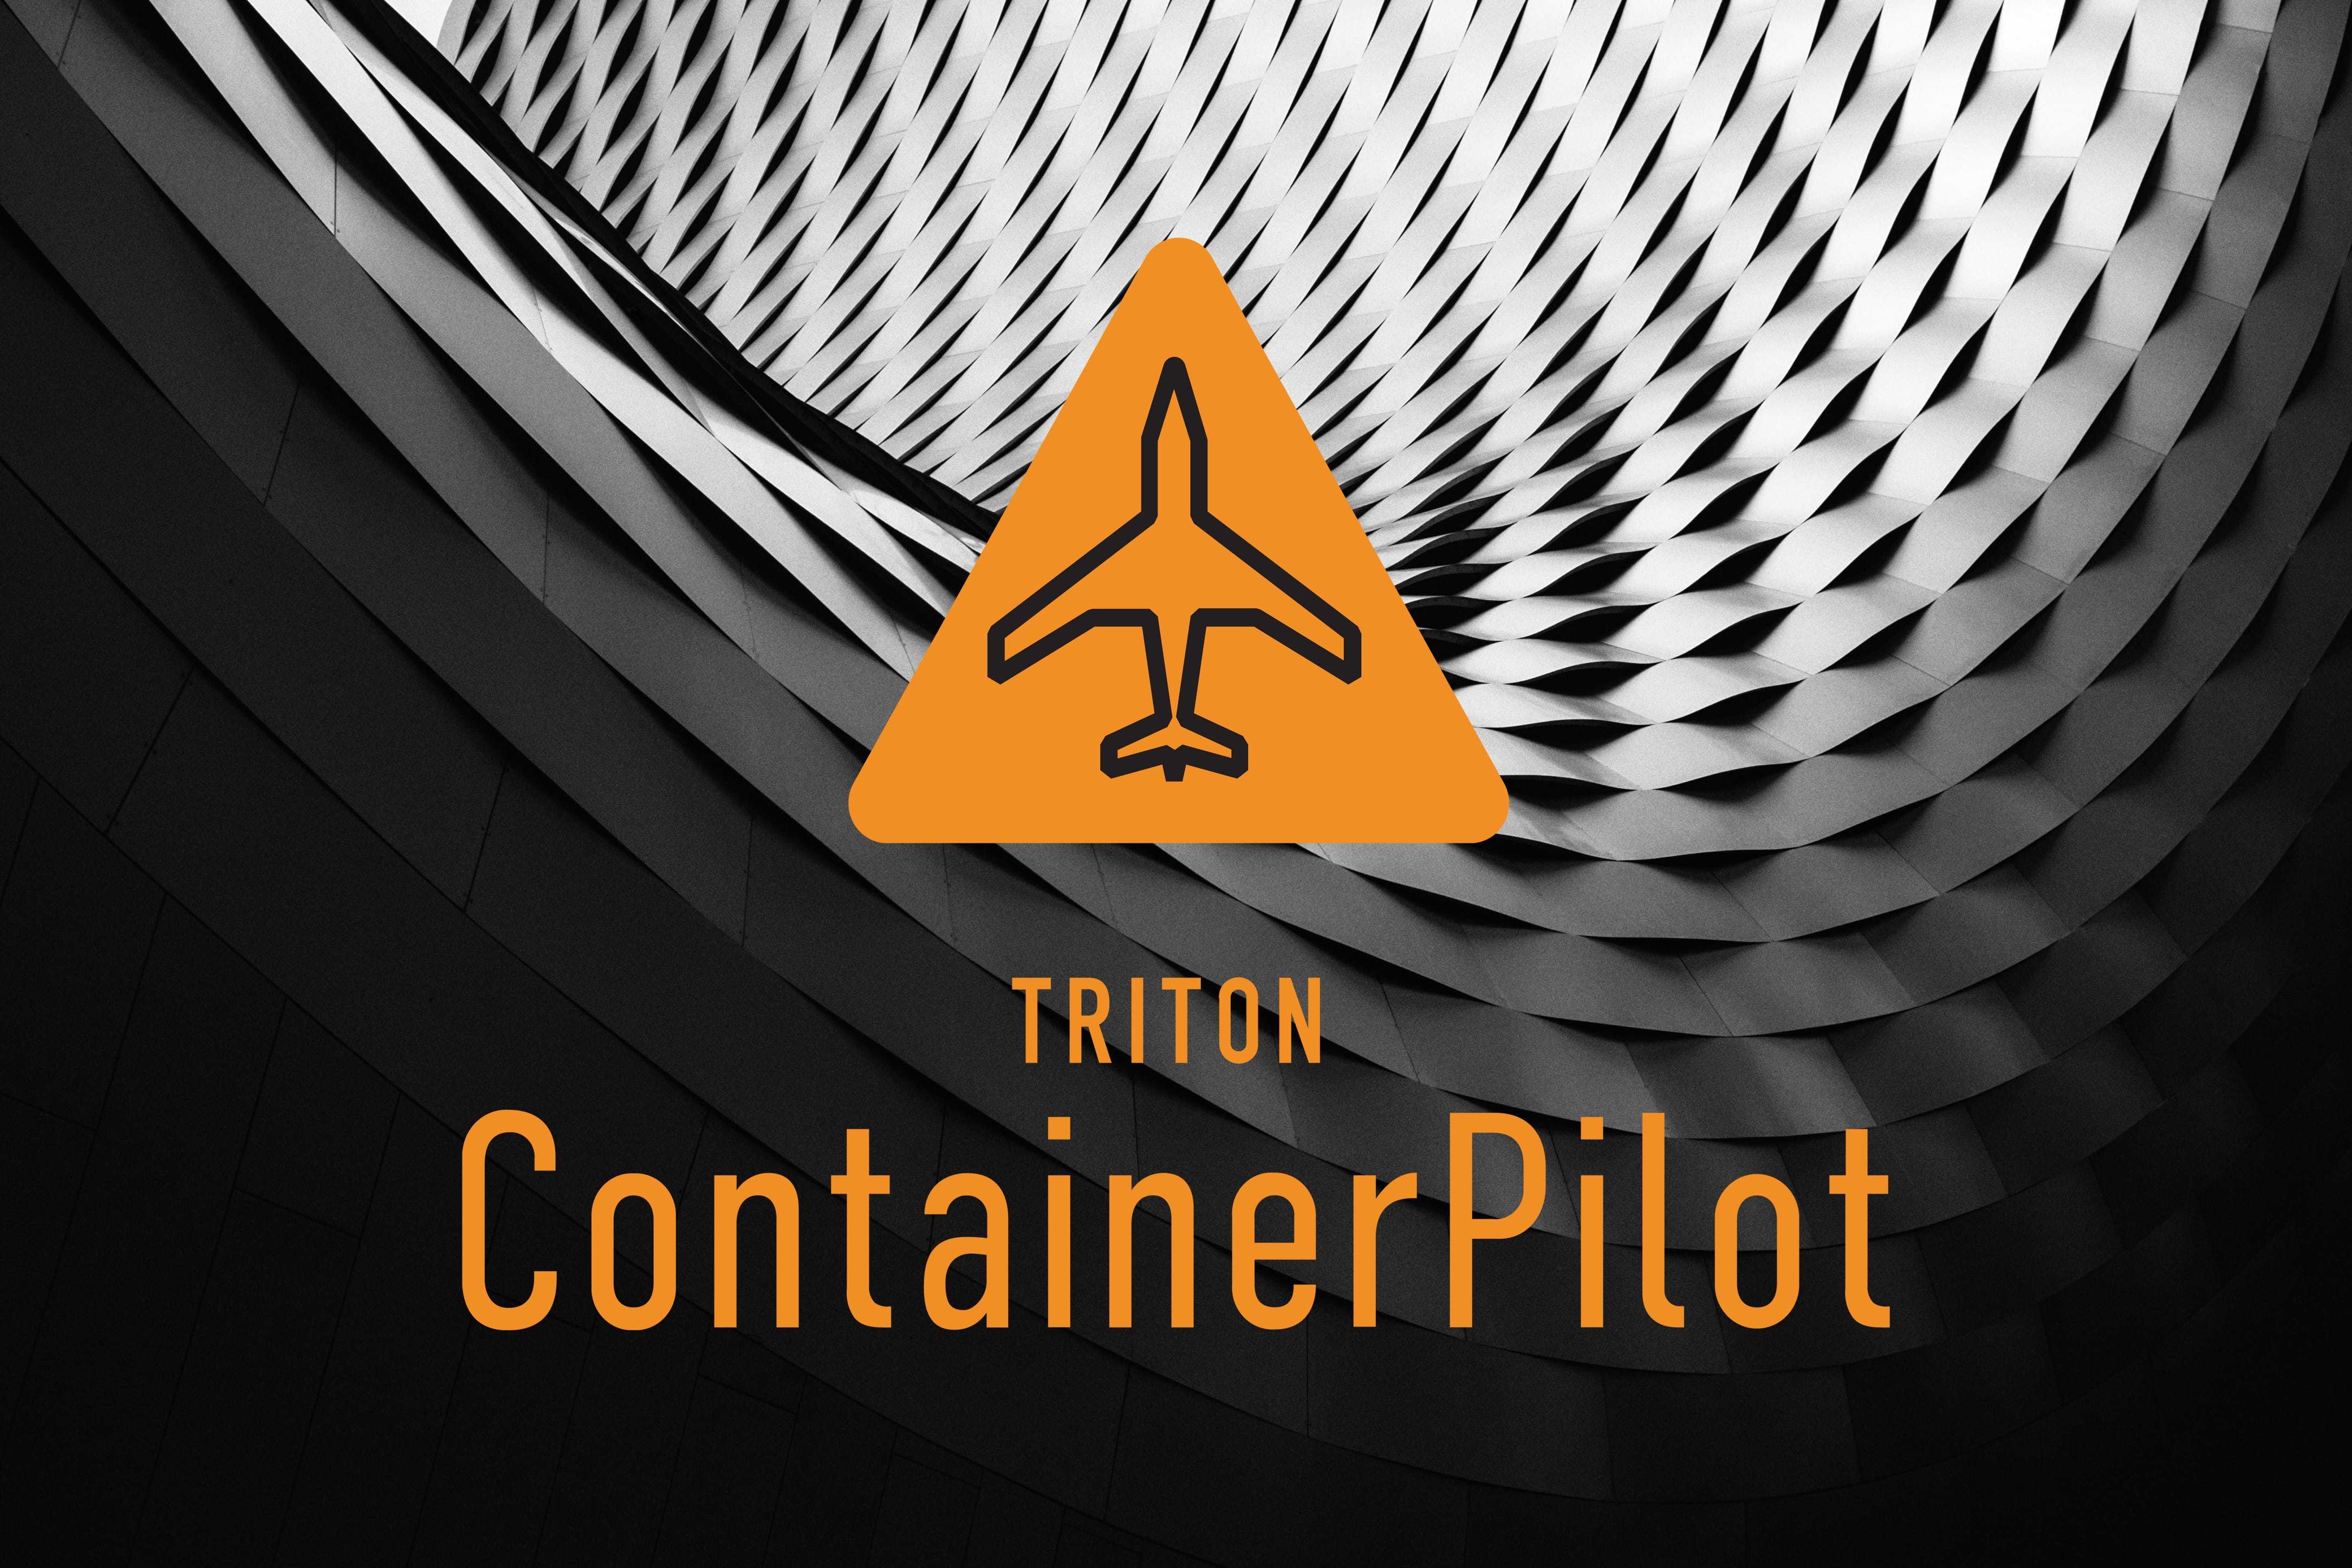 Containerpilot logo with public domain background photo.